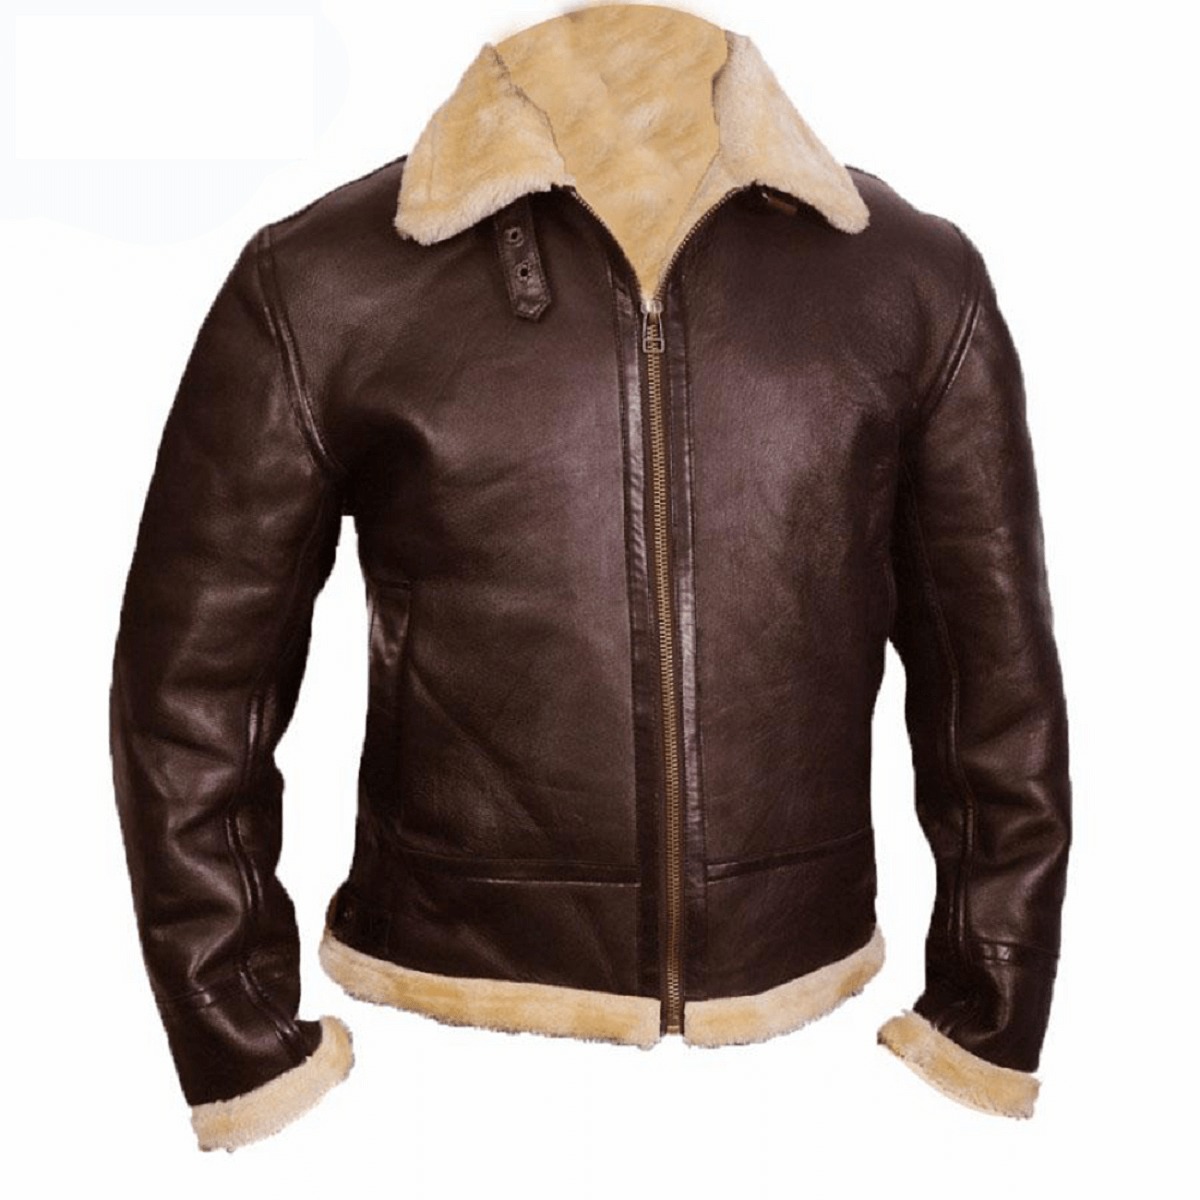 Tom Hardy Jacket - Dunkirk Farrier Brown Jacket